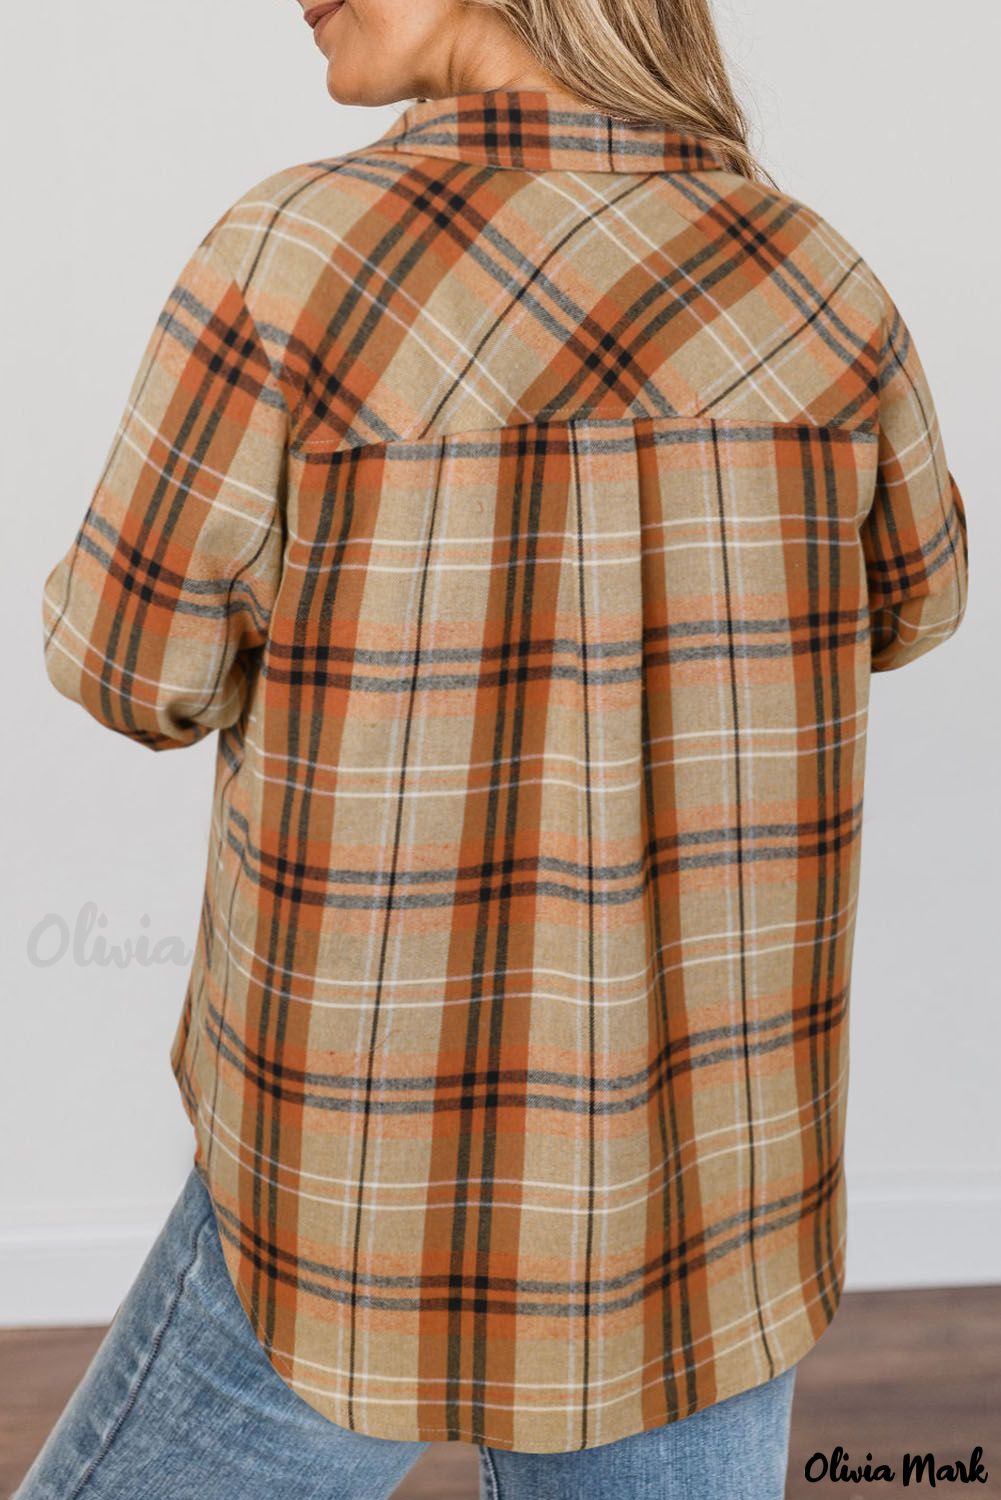 Olivia Mark – Orange flannel plaid shirt with chest pockets – Olivia Mark